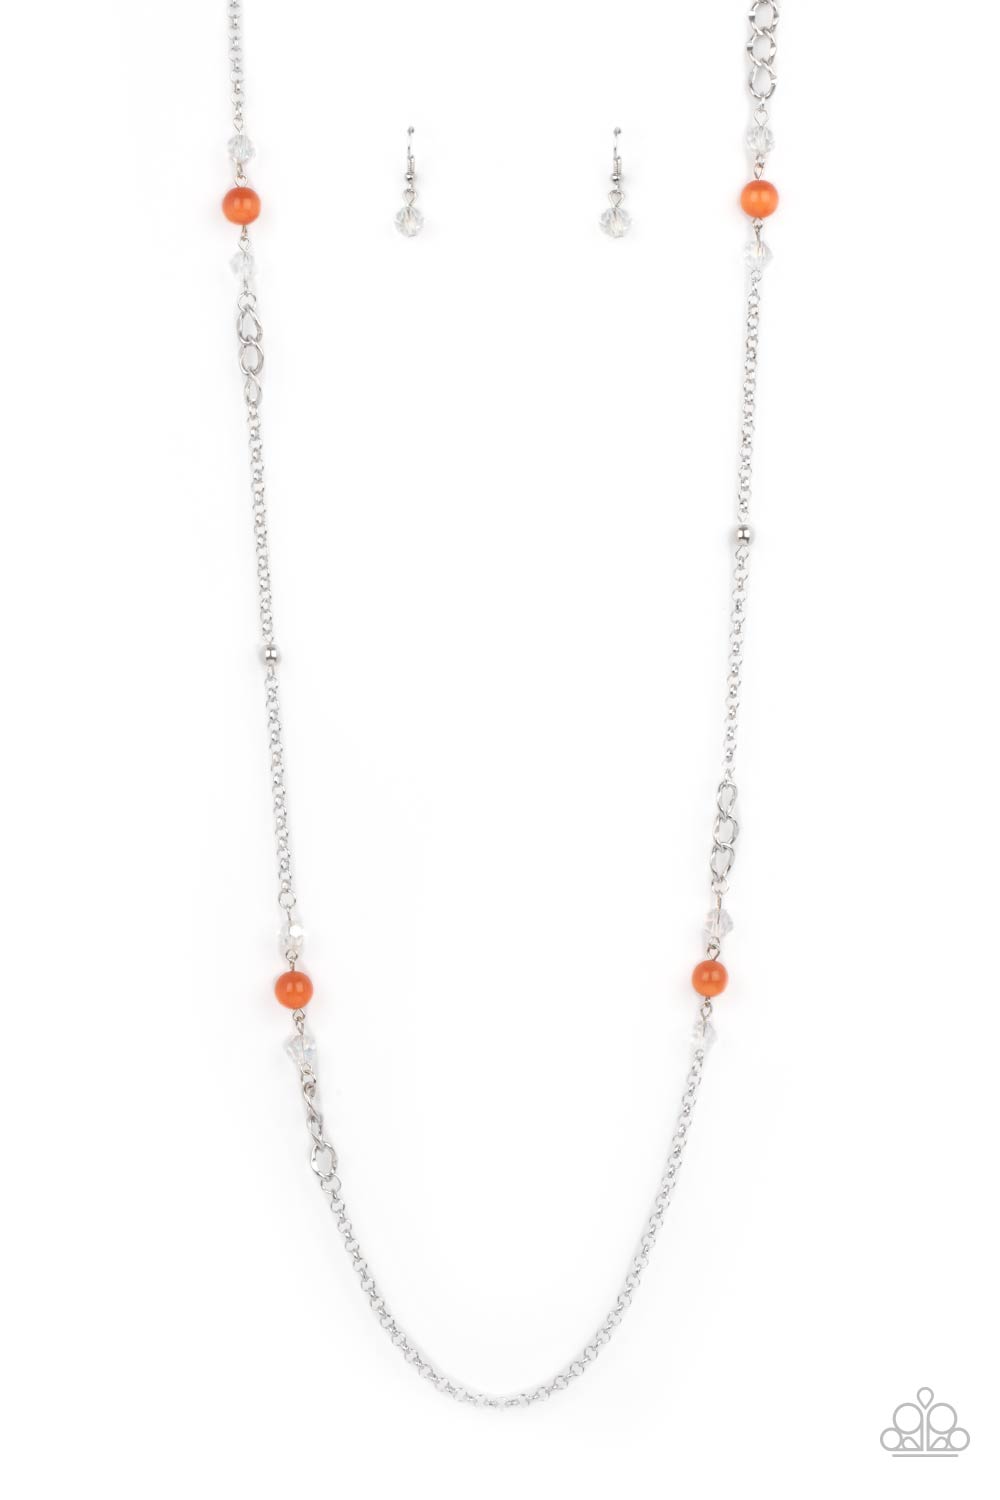 Shop online silver long kundan necklace design at 30% Discount.